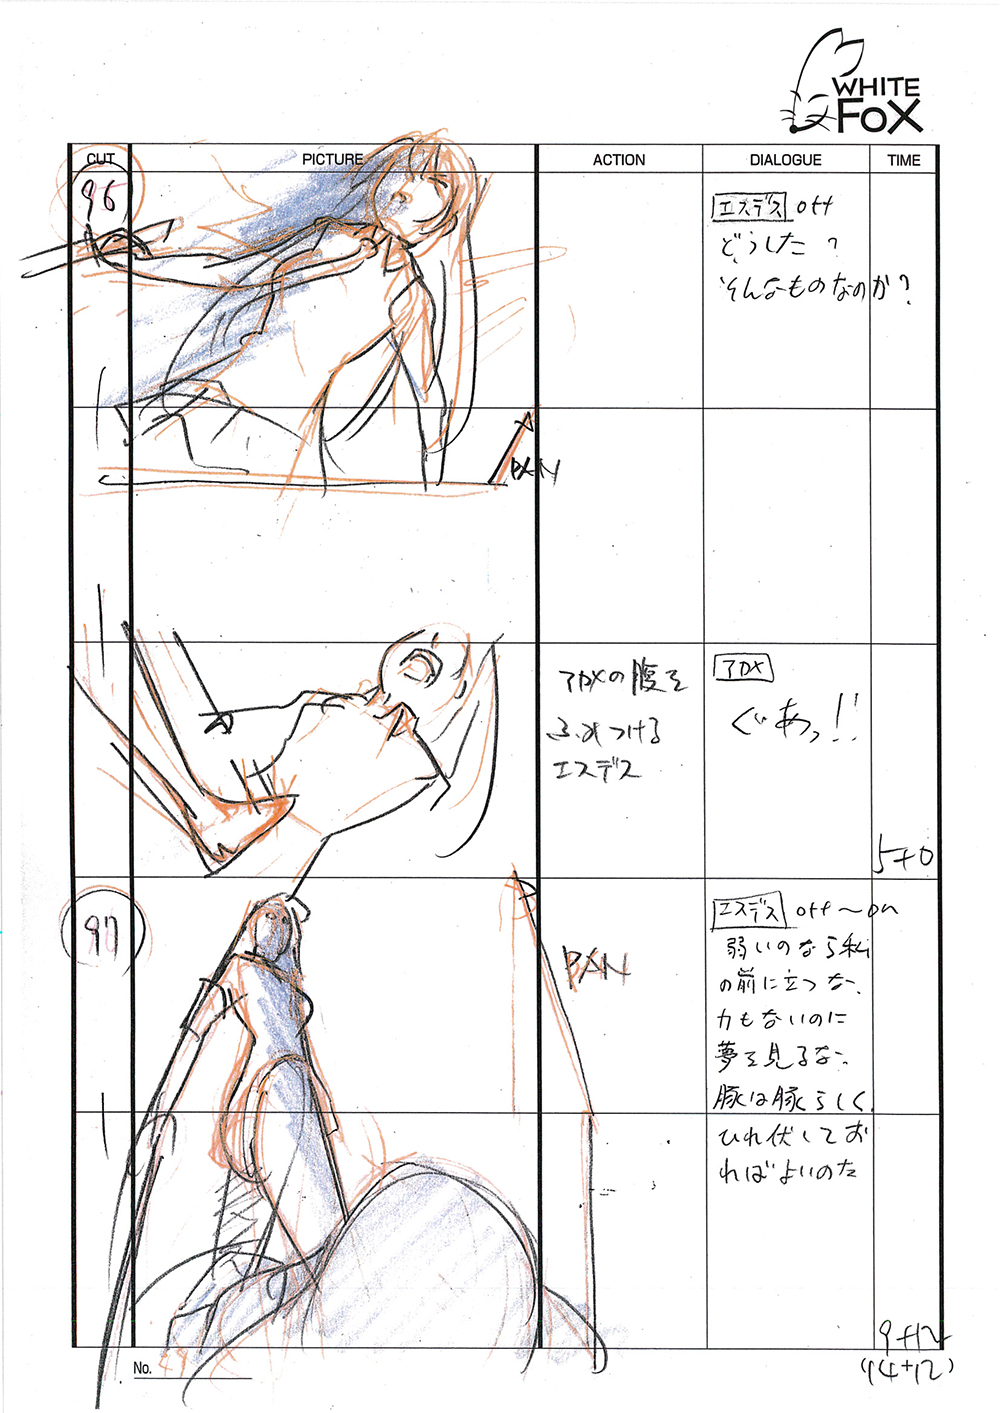 Akame ga Kill Episode 24 Storyboard Leak 051